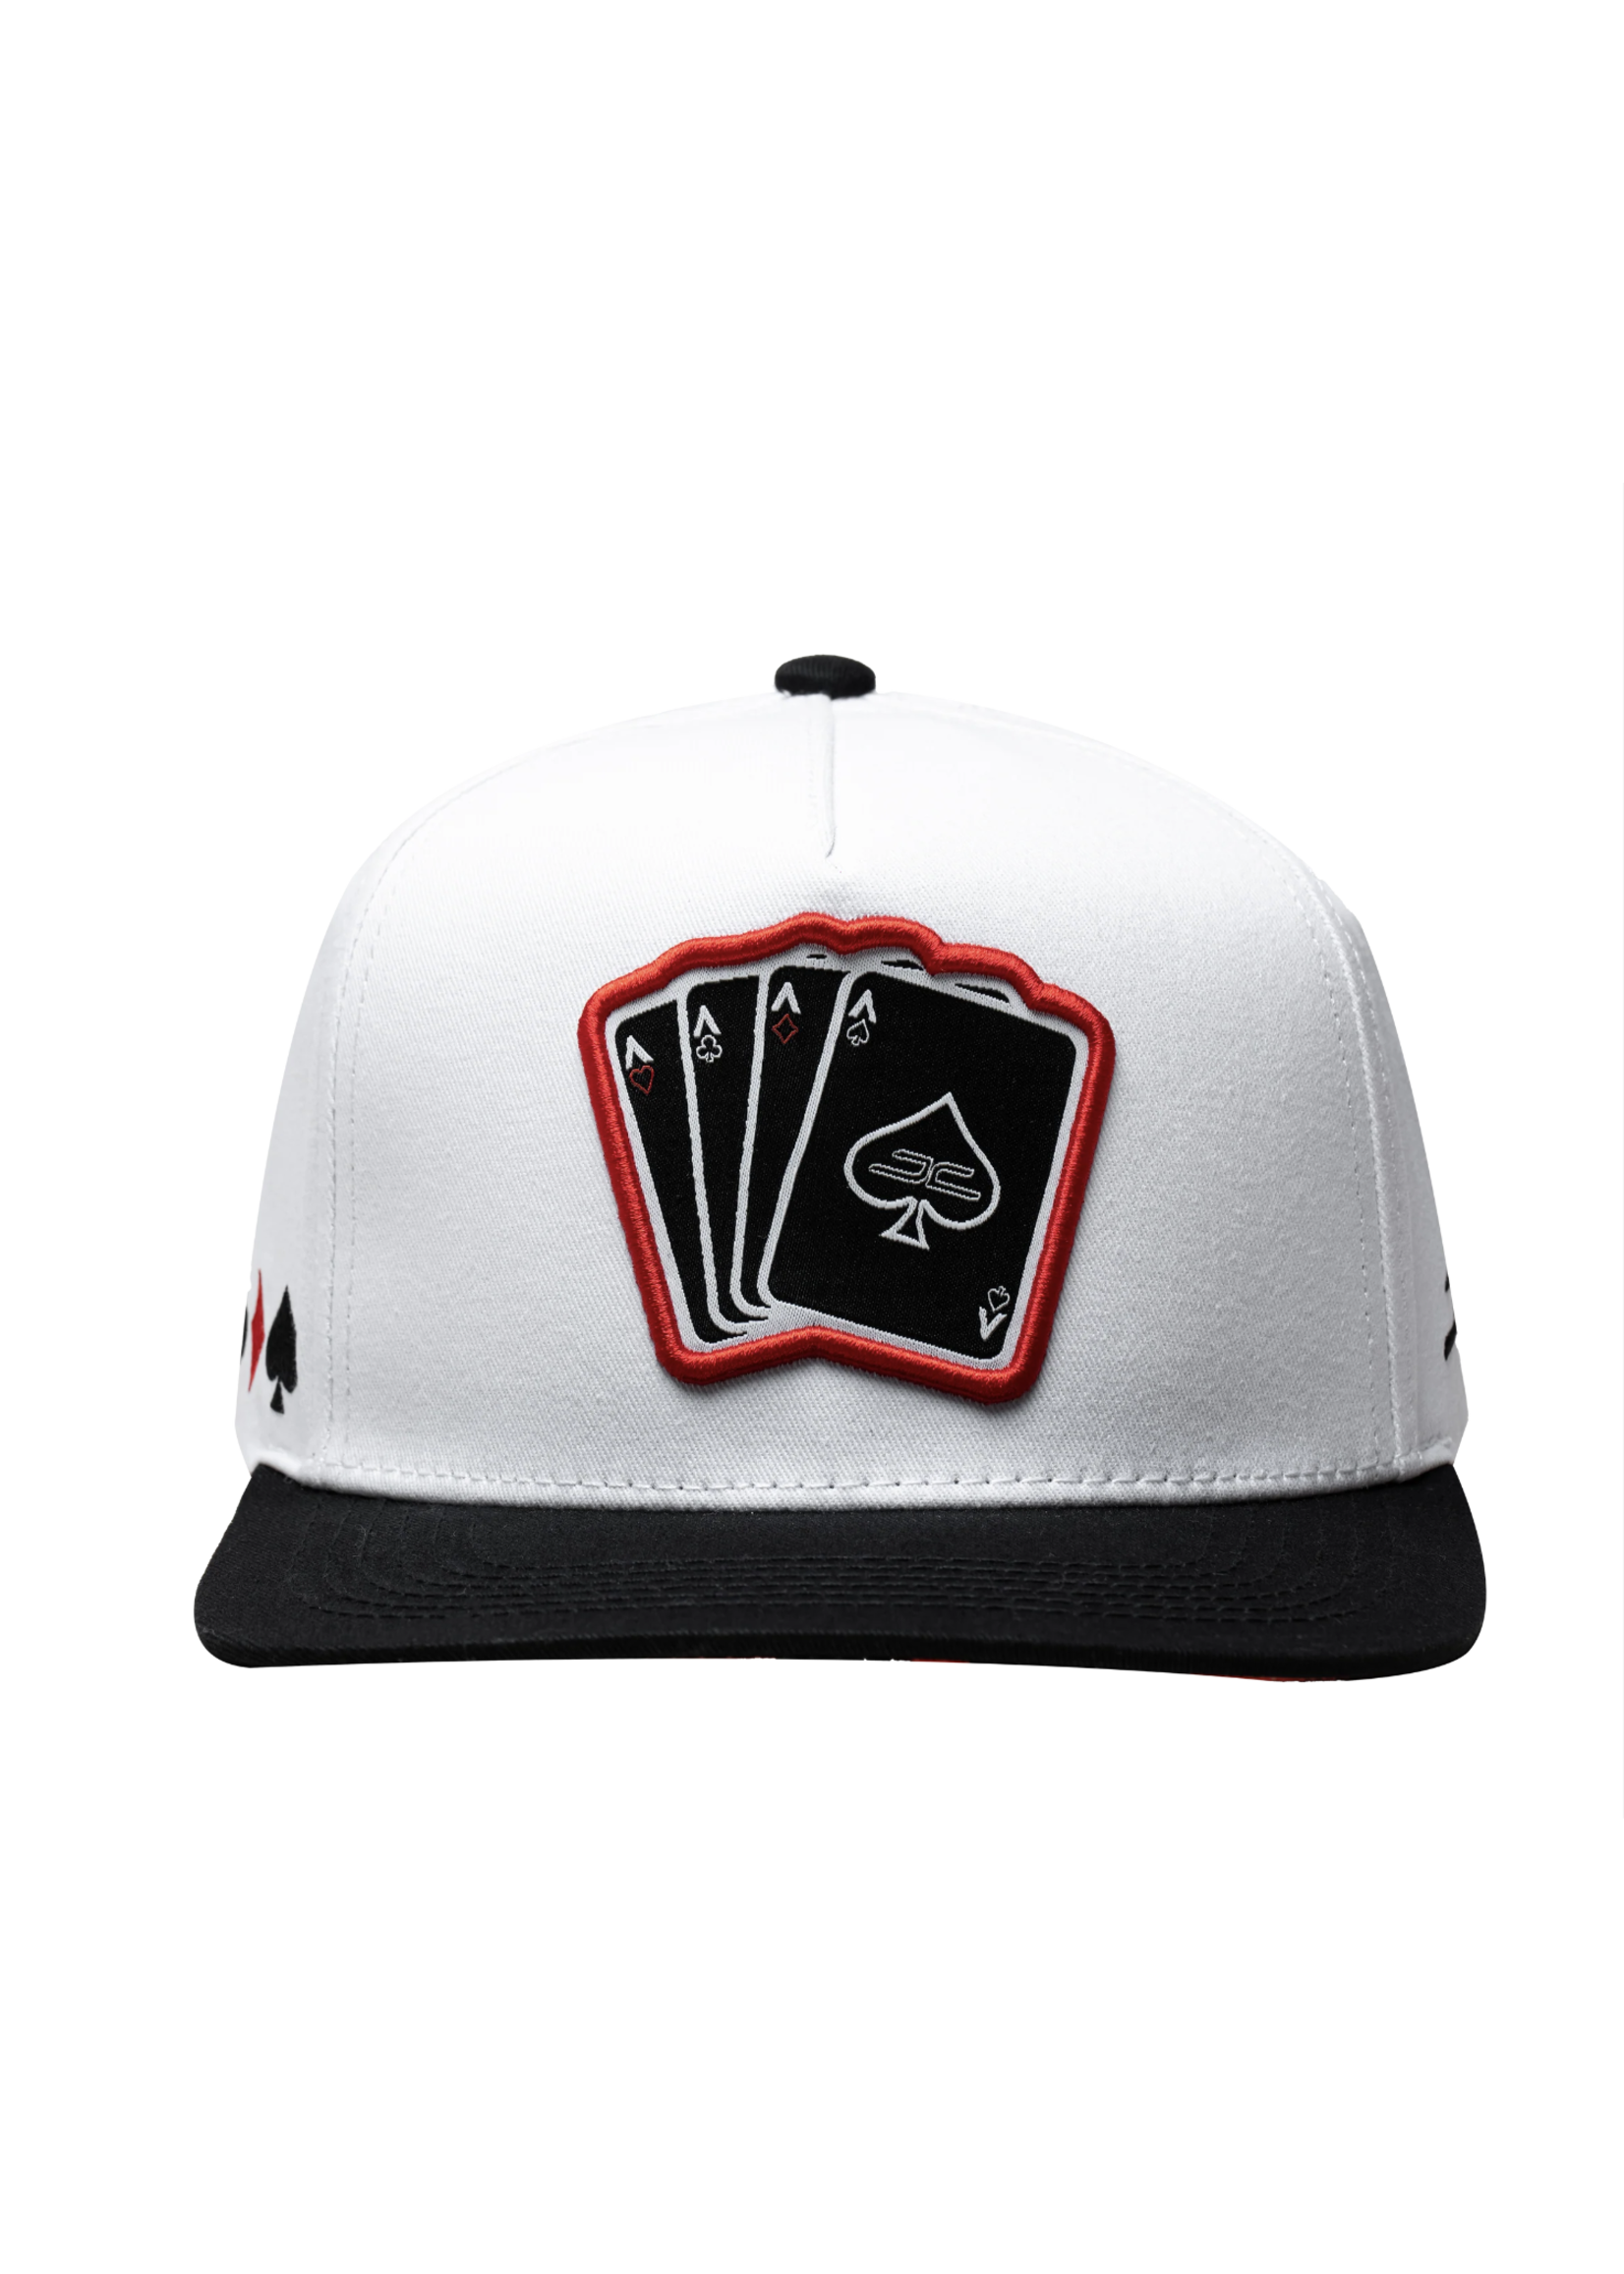 Poker White Hat